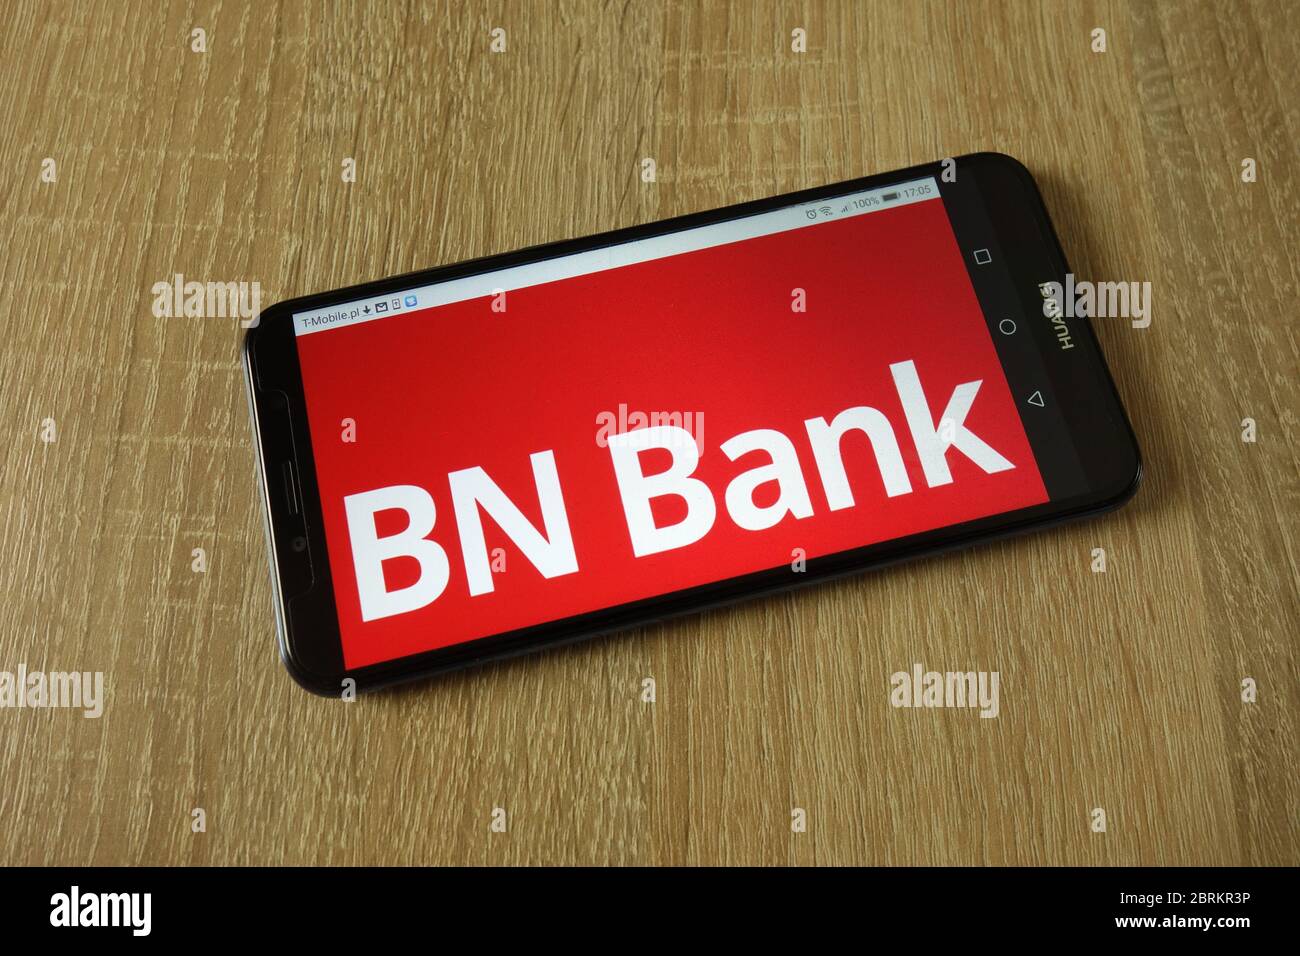 BN Bank ASA logo displayed on smartphone Stock Photo